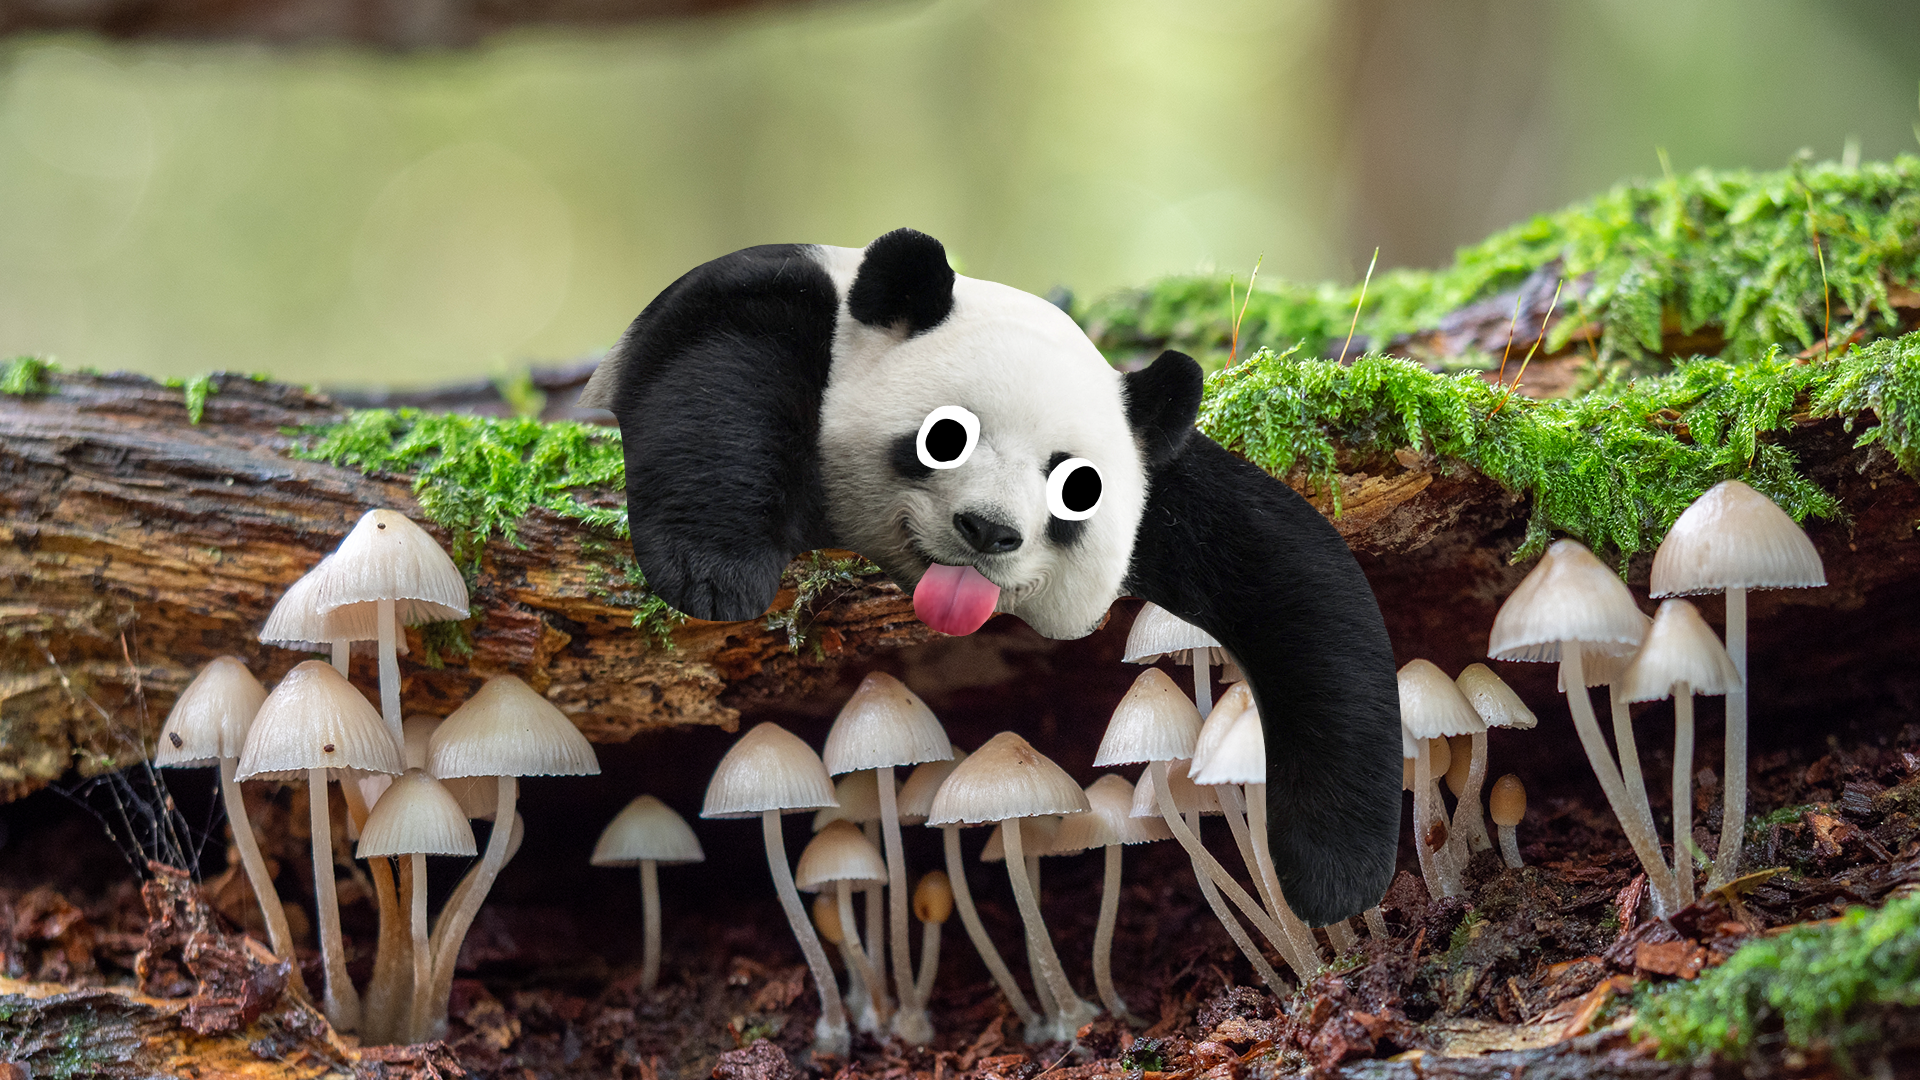 Mushrooms and derpy panda